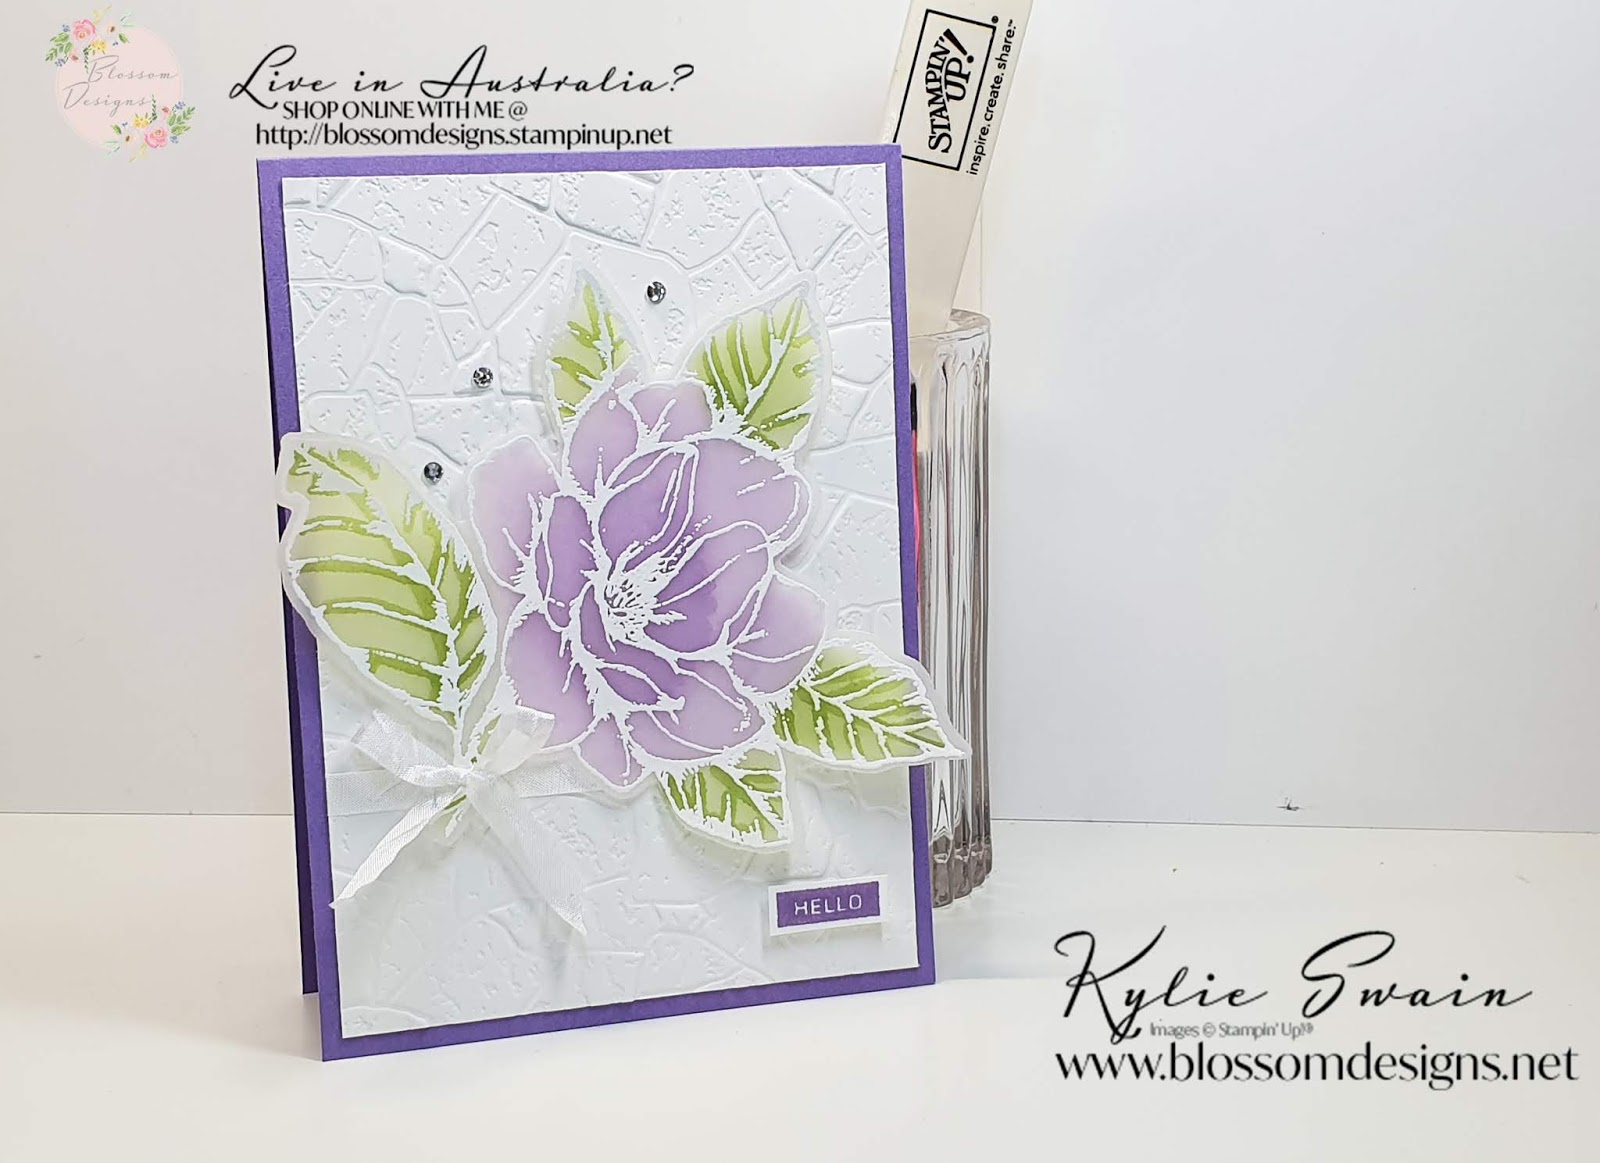 Blossom Designs: Highland Heather Magnolia